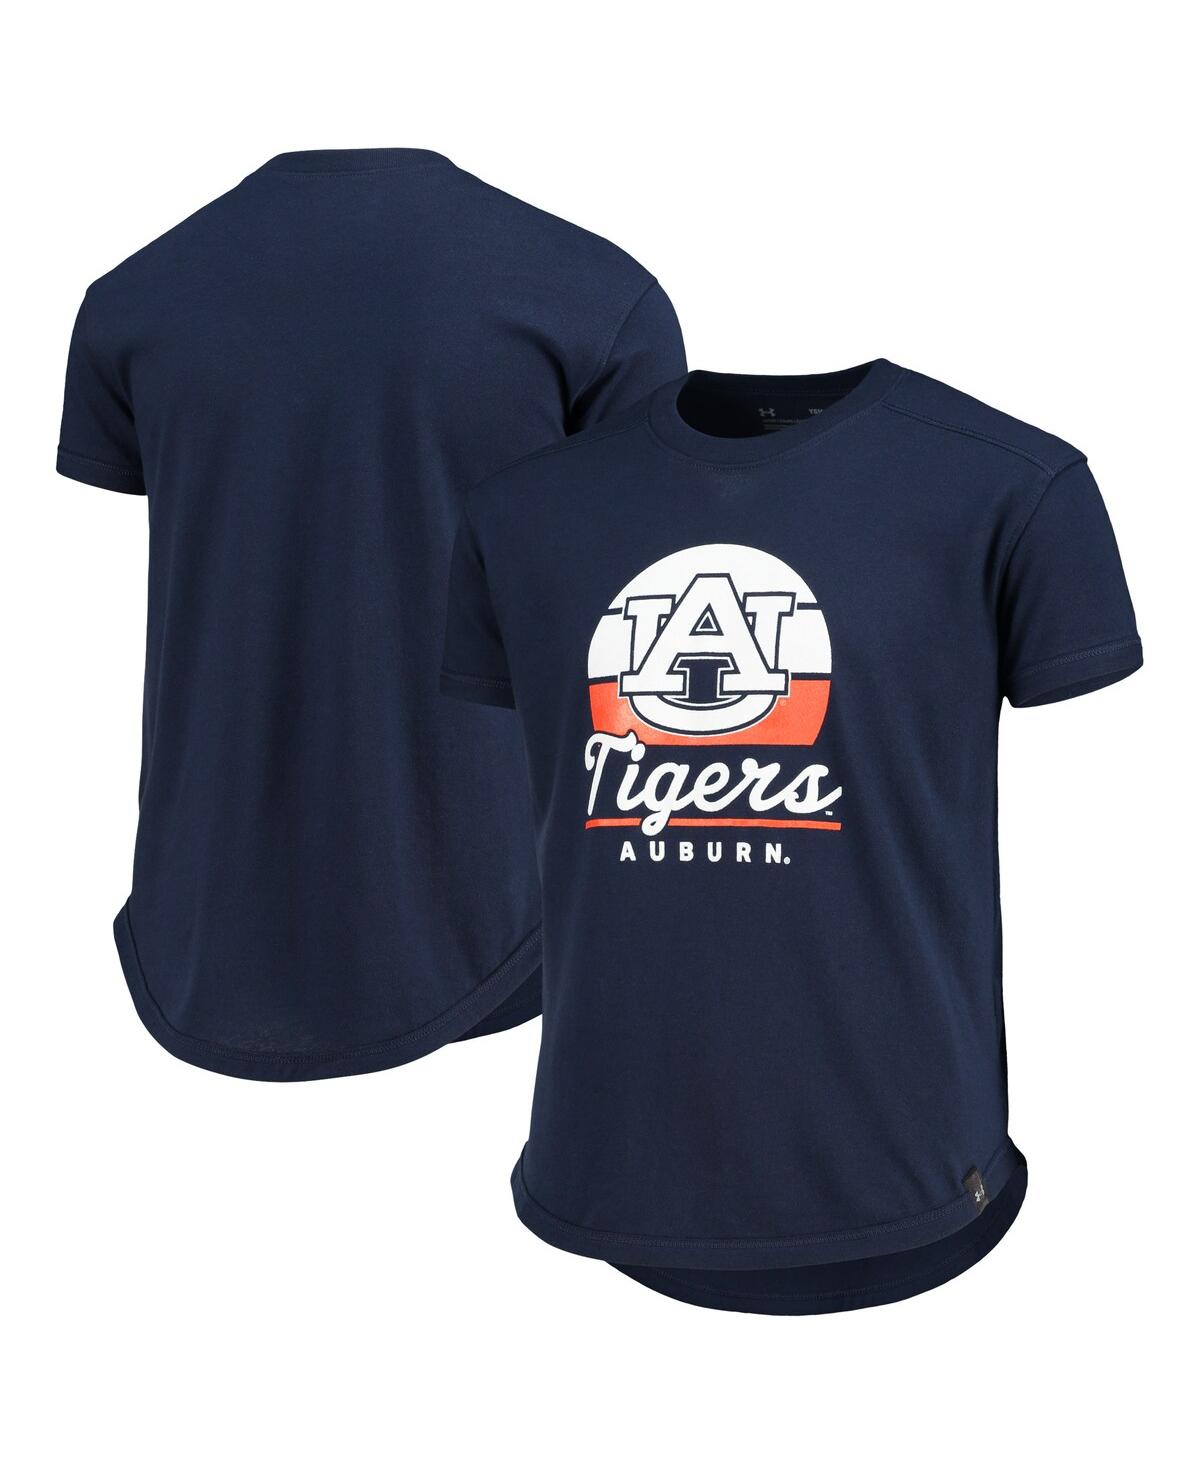 Under Armour Kids' Big Girls  Navy Auburn Tigers T-shirt